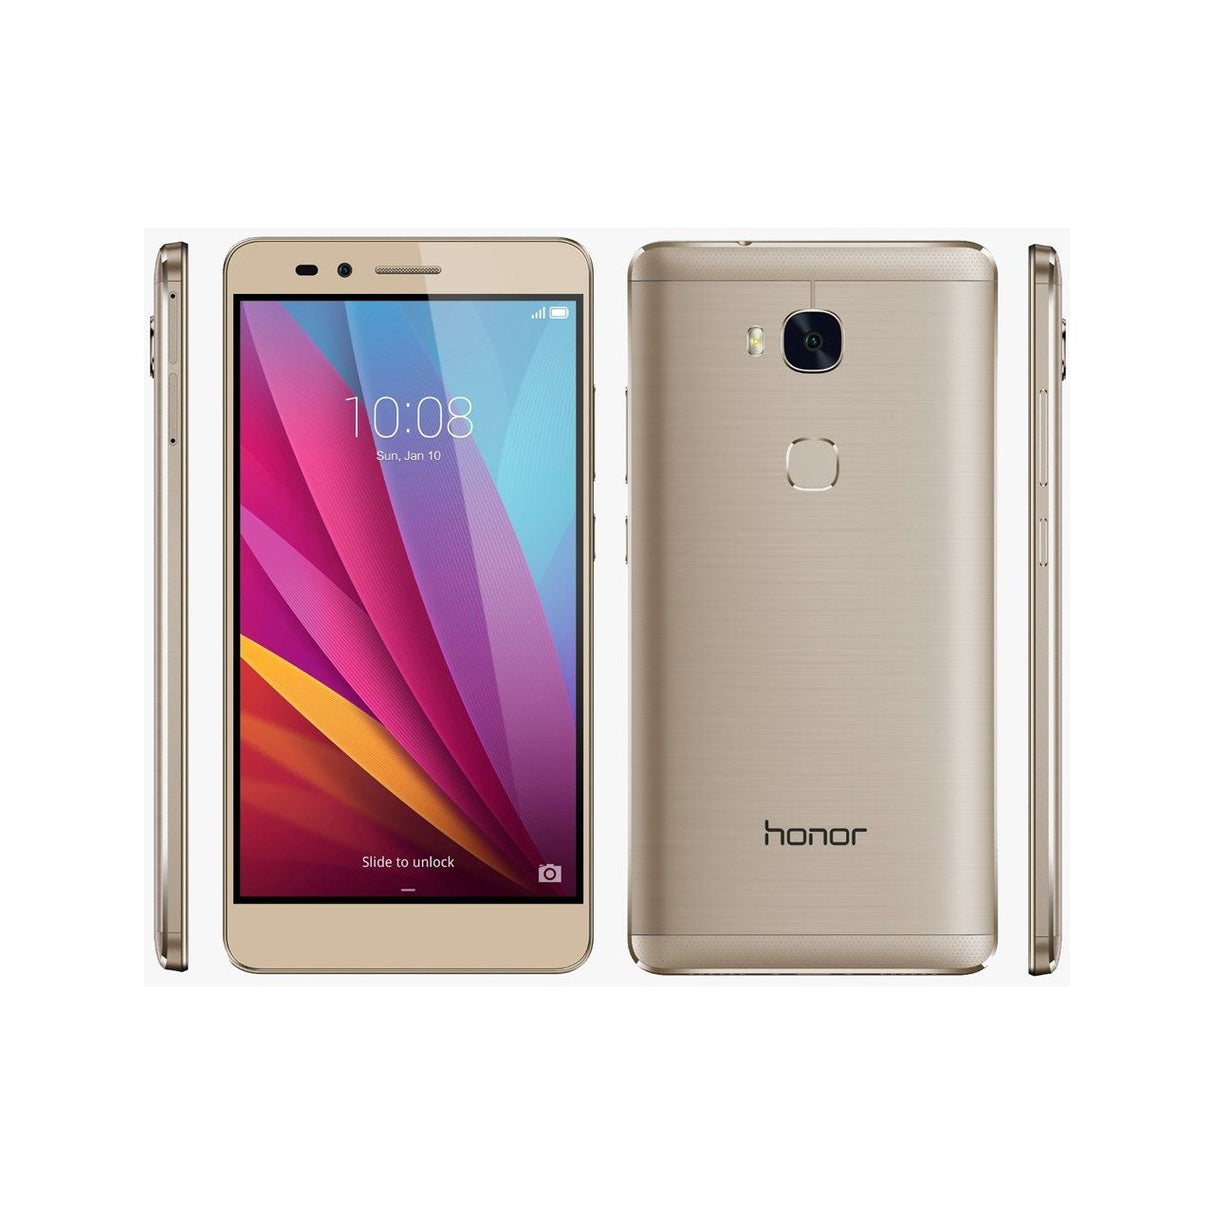 Huawei Honor 5X - 16 GB - Gold - Unlocked - GSM